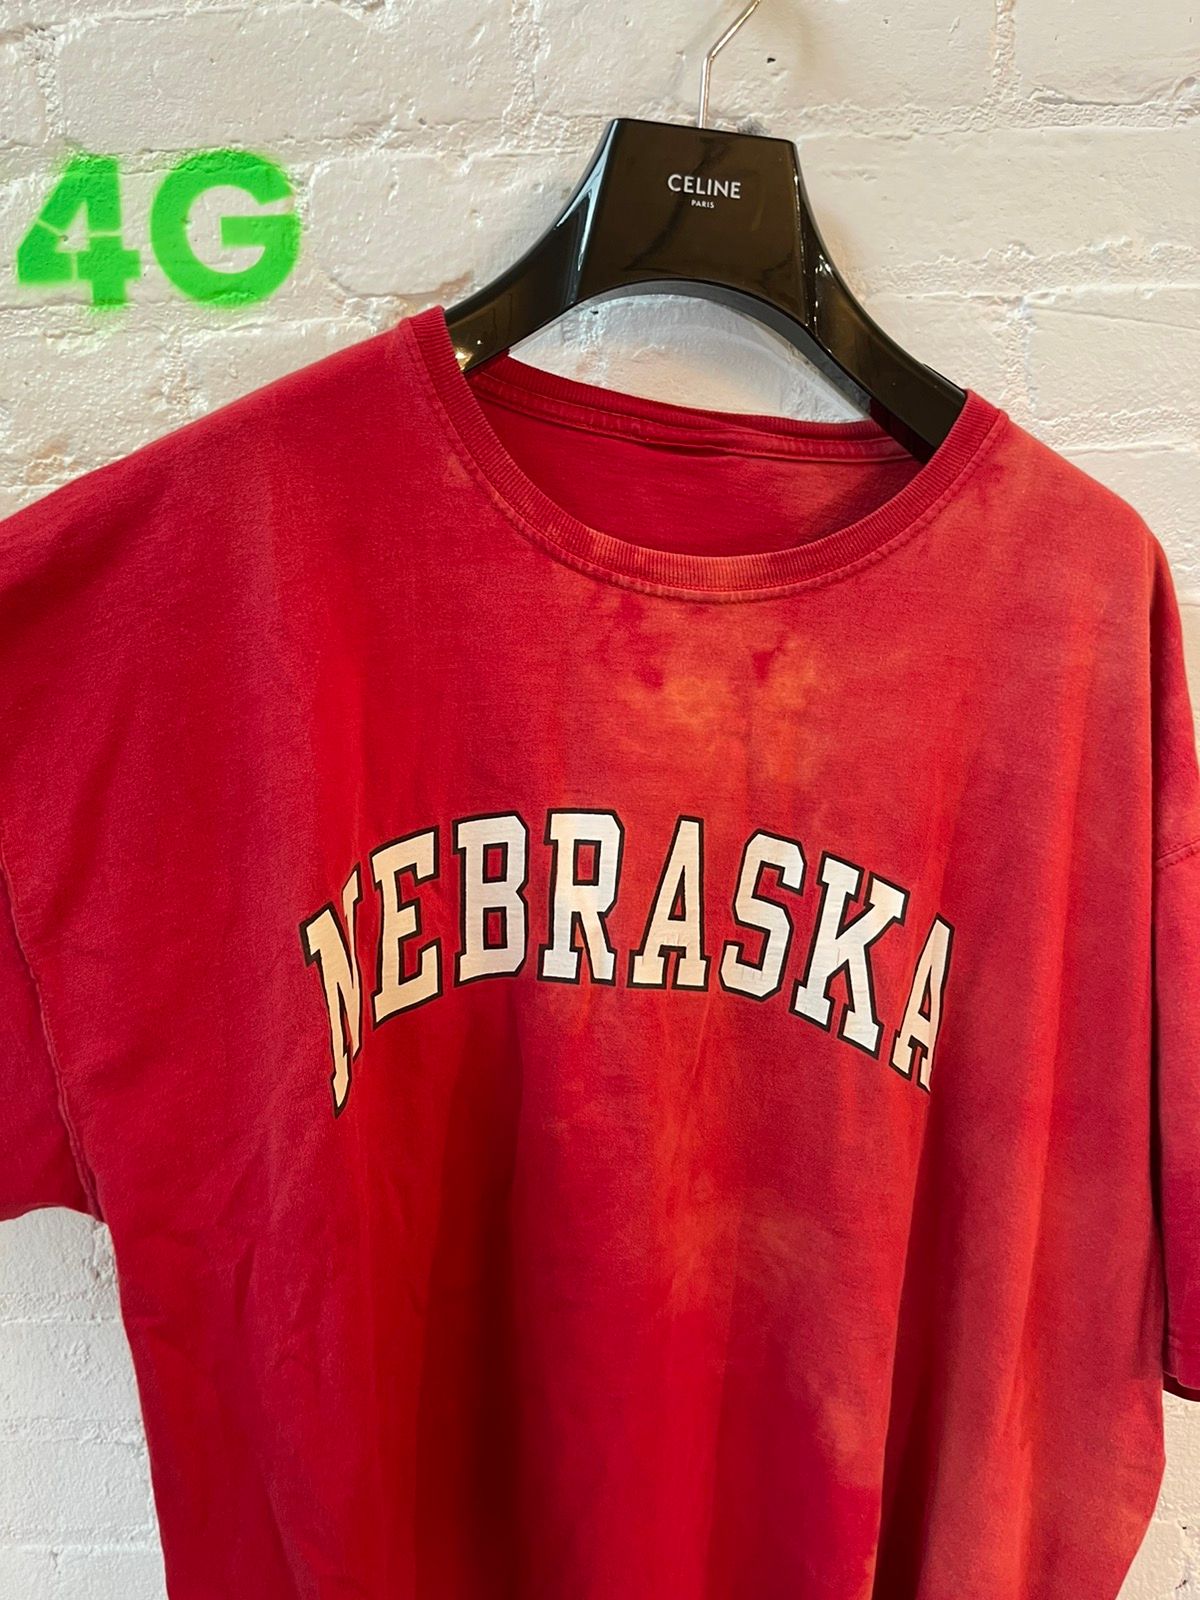 Vintage 2000s NEBRASKA Thrashed SUN FADE Shirt